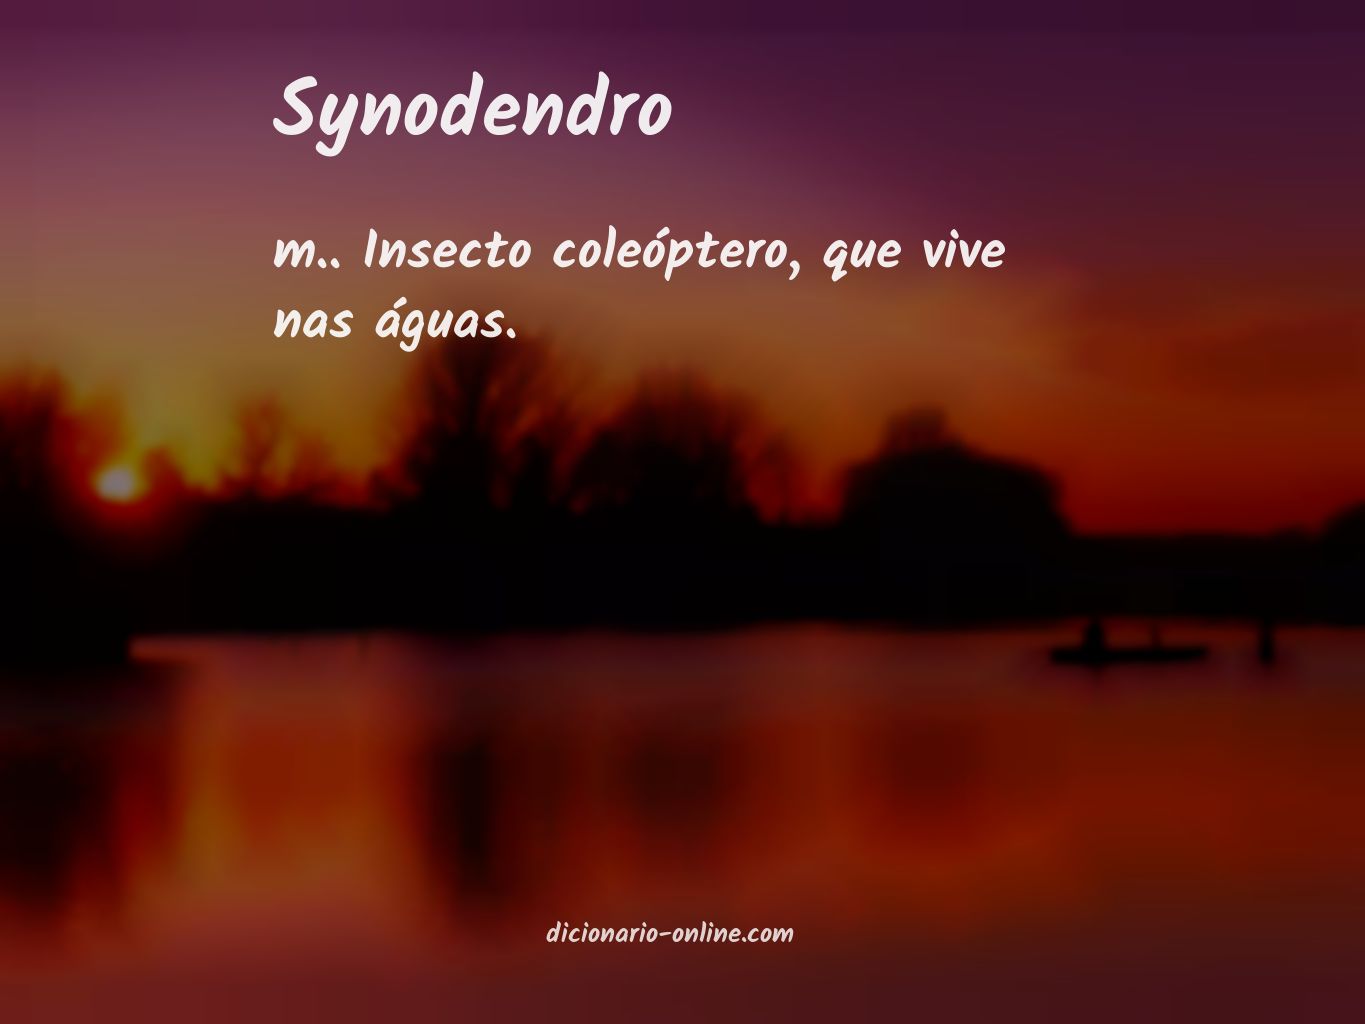 Significado de synodendro